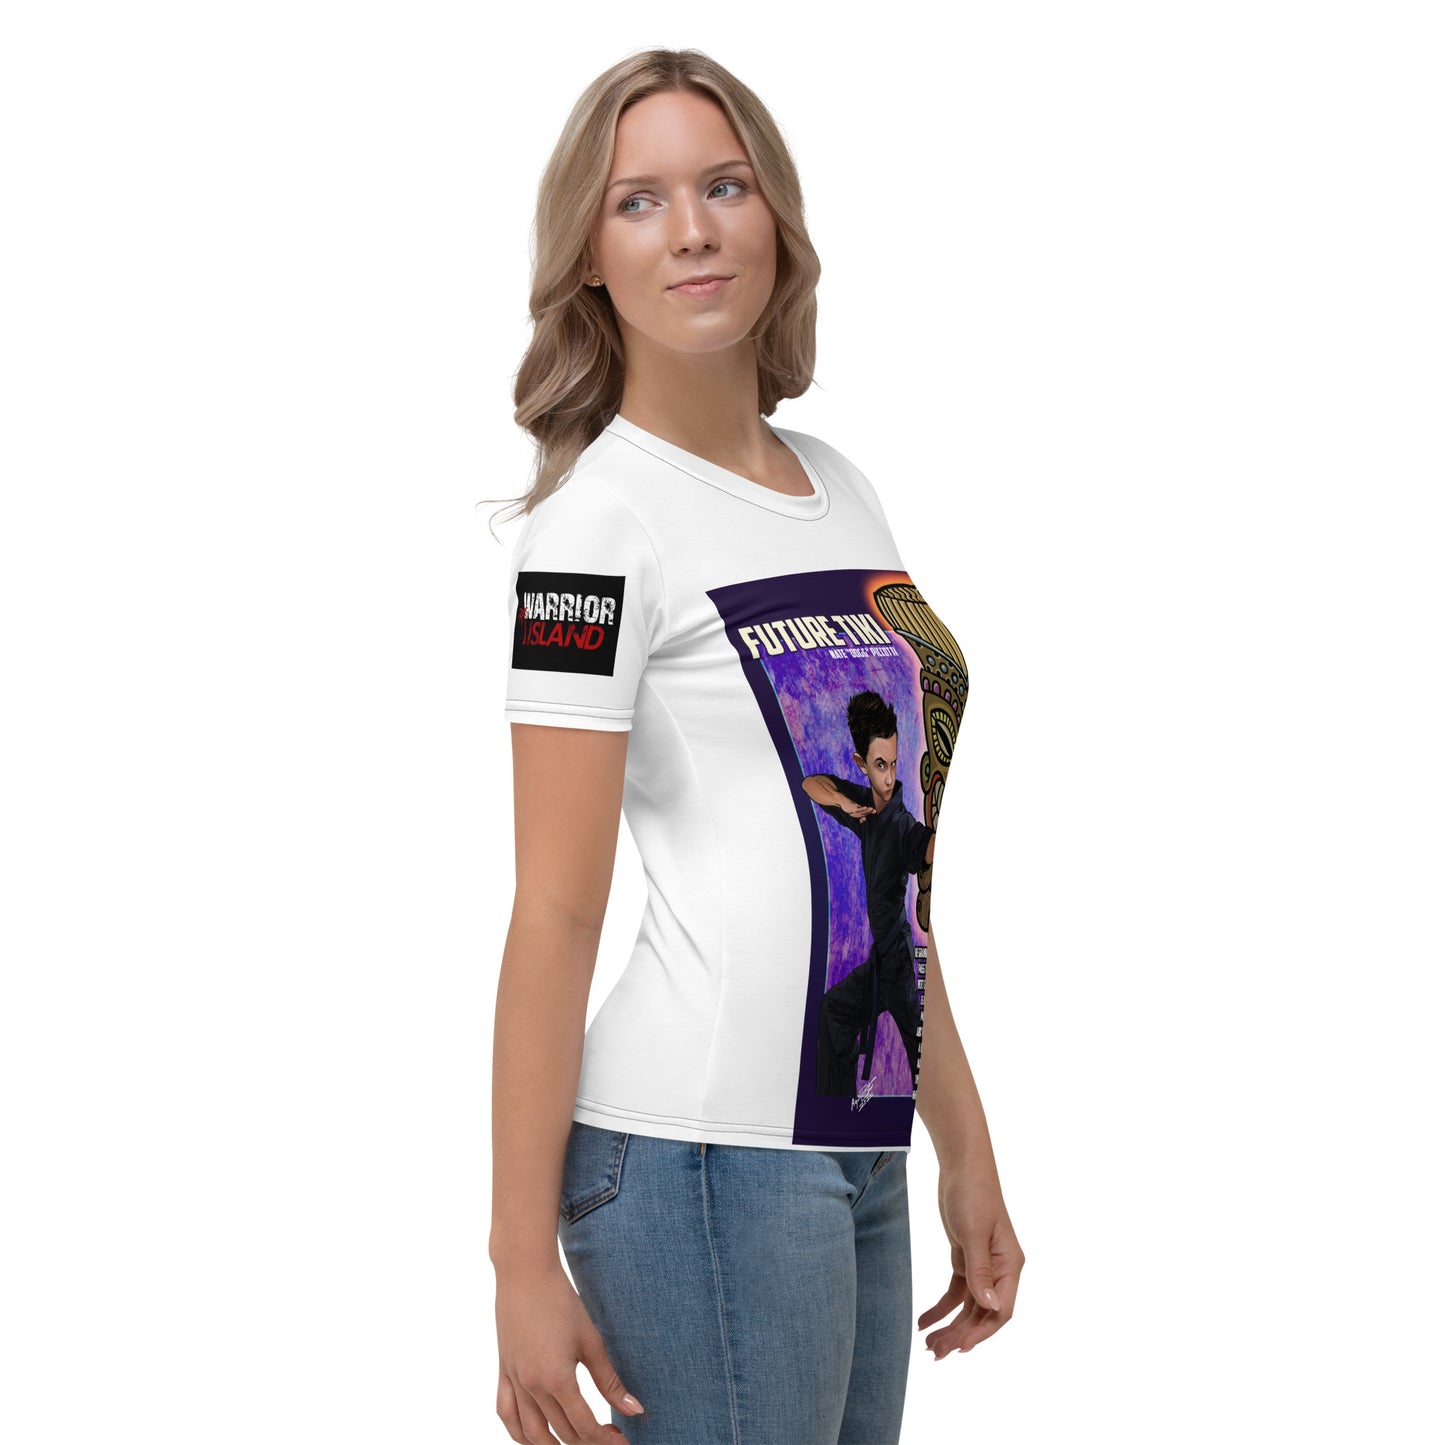 Nate Dogg Women's T-shirt